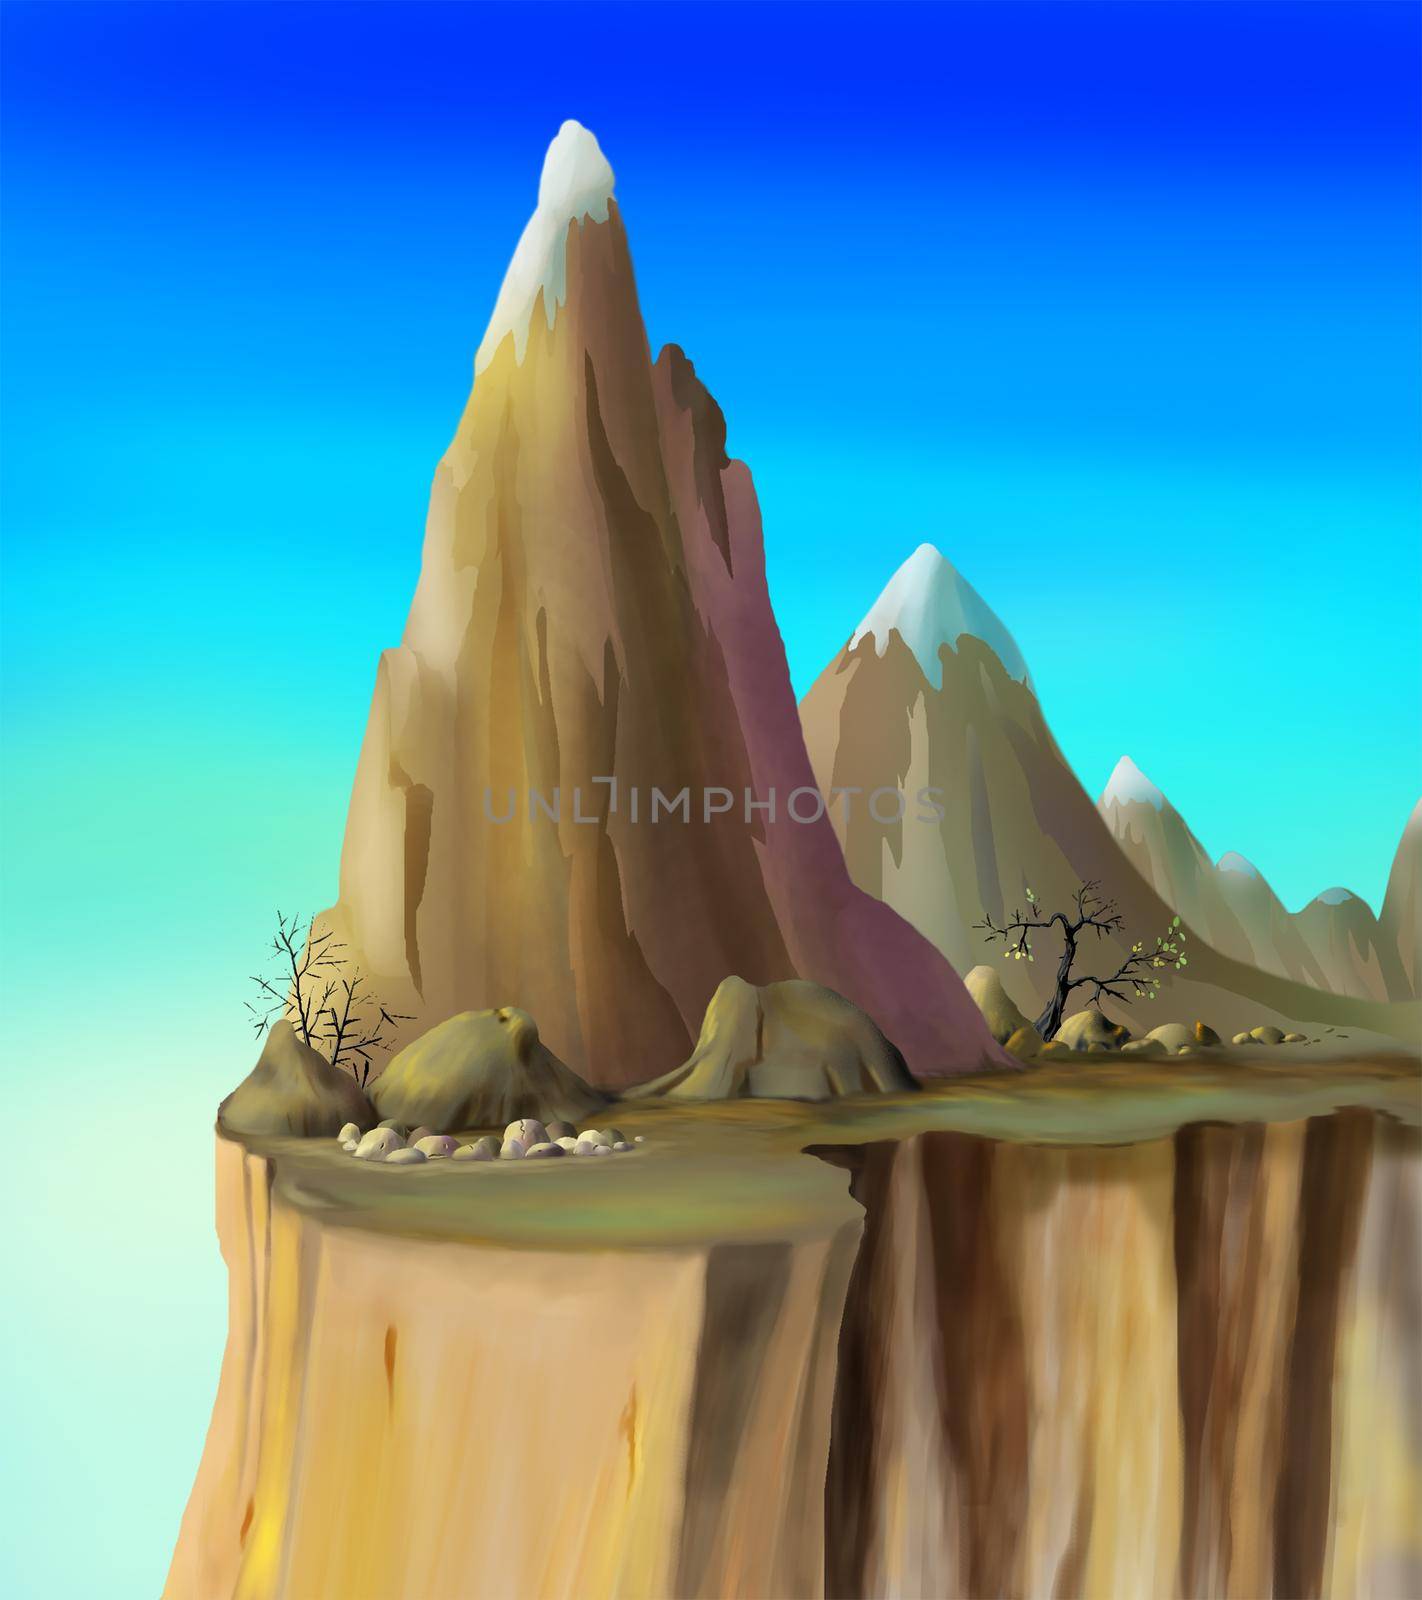 Fairy tale peak mountain illustration by Multipedia